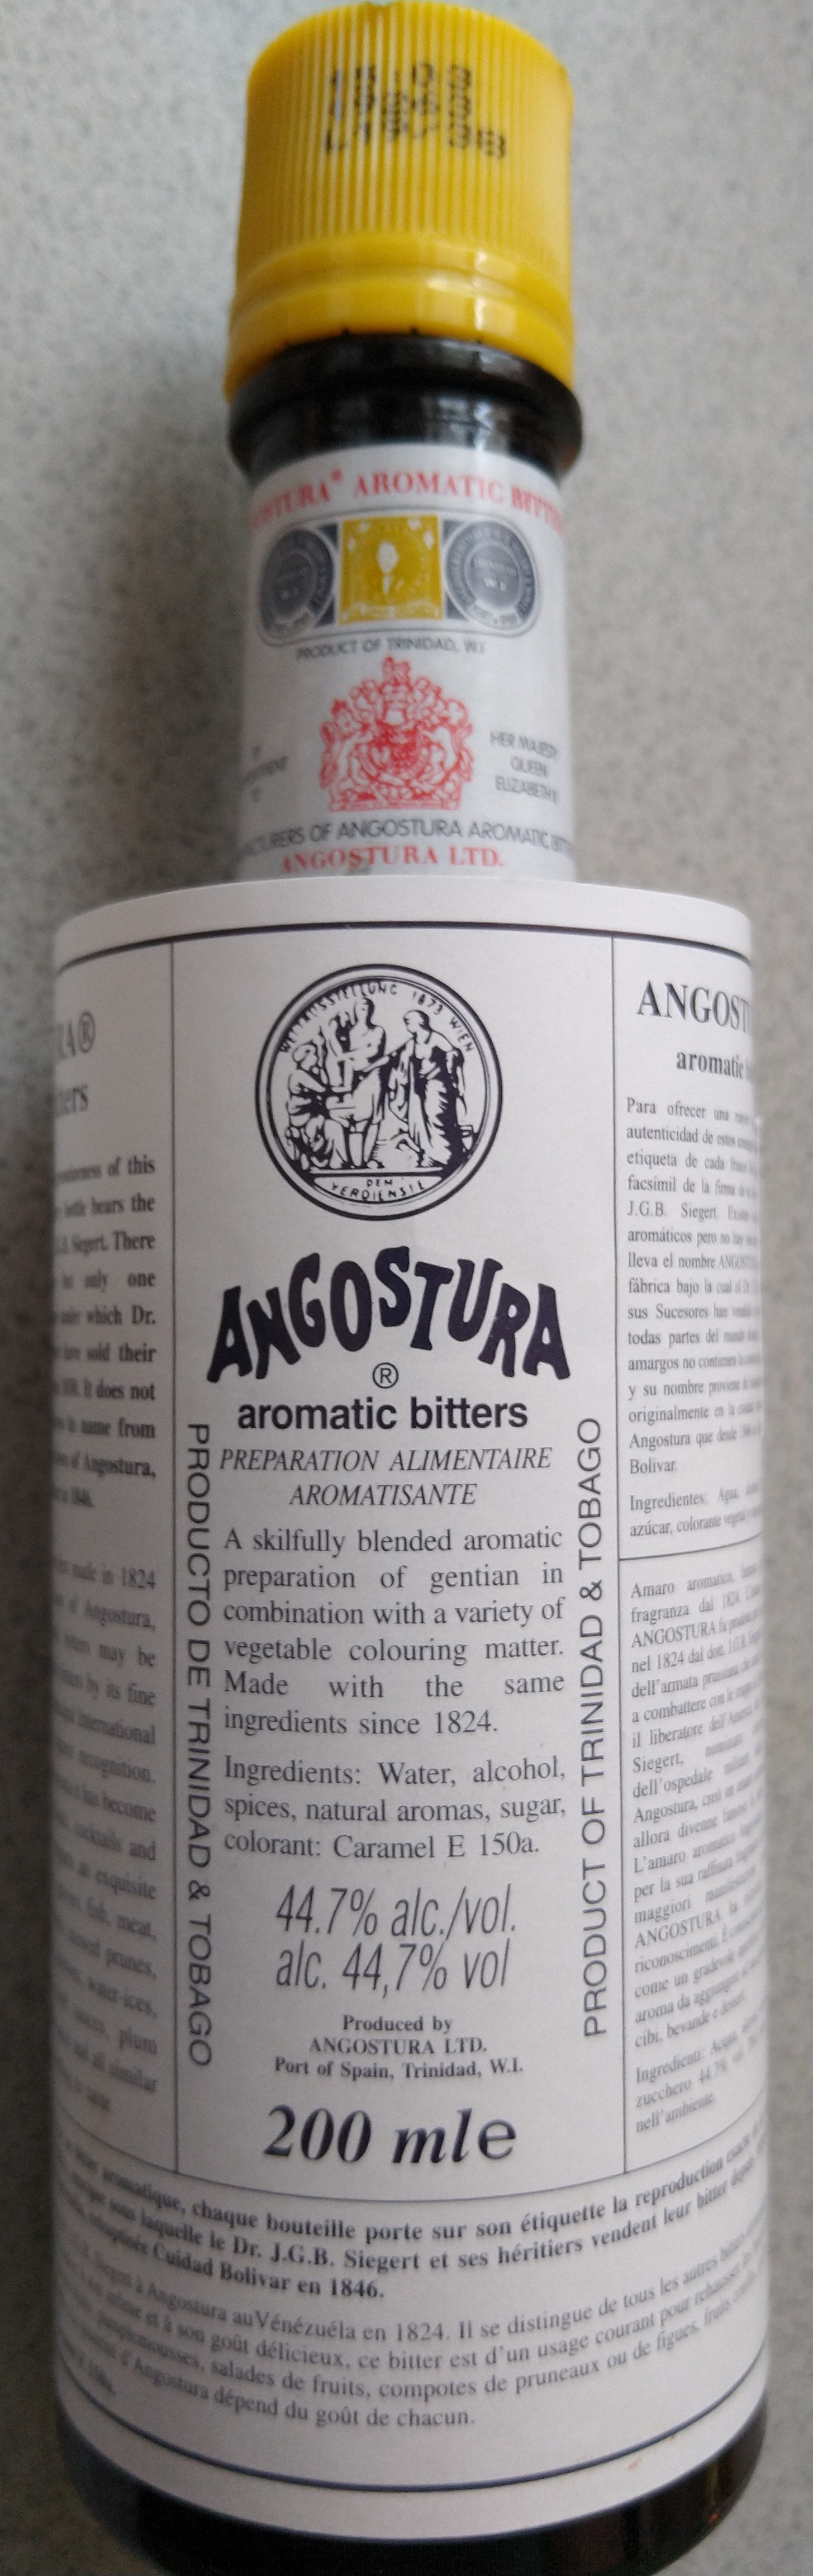 Angostura  - aromatic bitters - Product